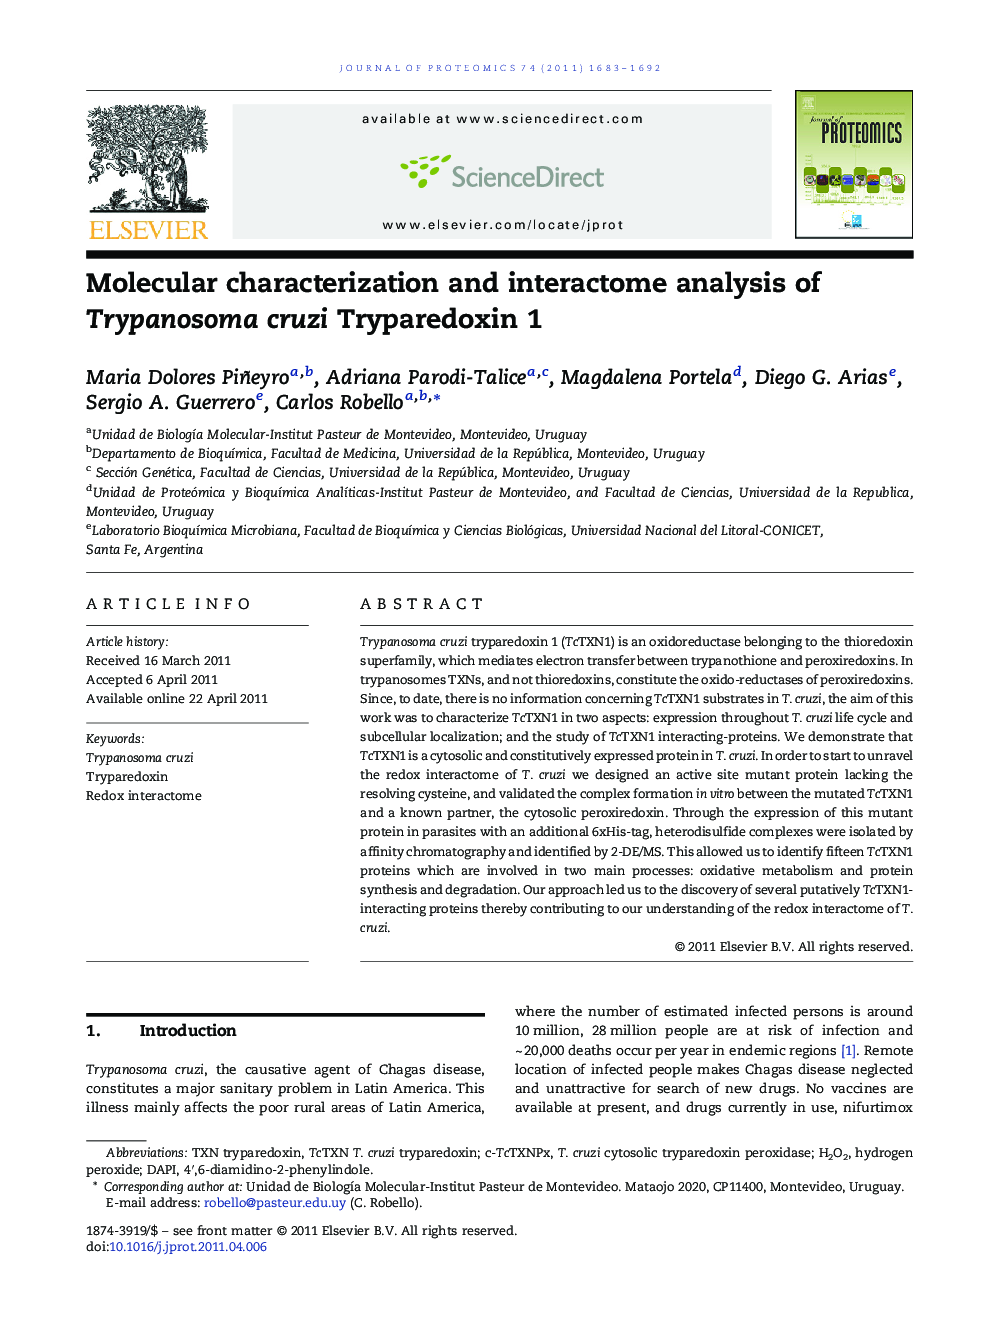 Molecular characterization and interactome analysis of Trypanosoma cruzi Tryparedoxin 1